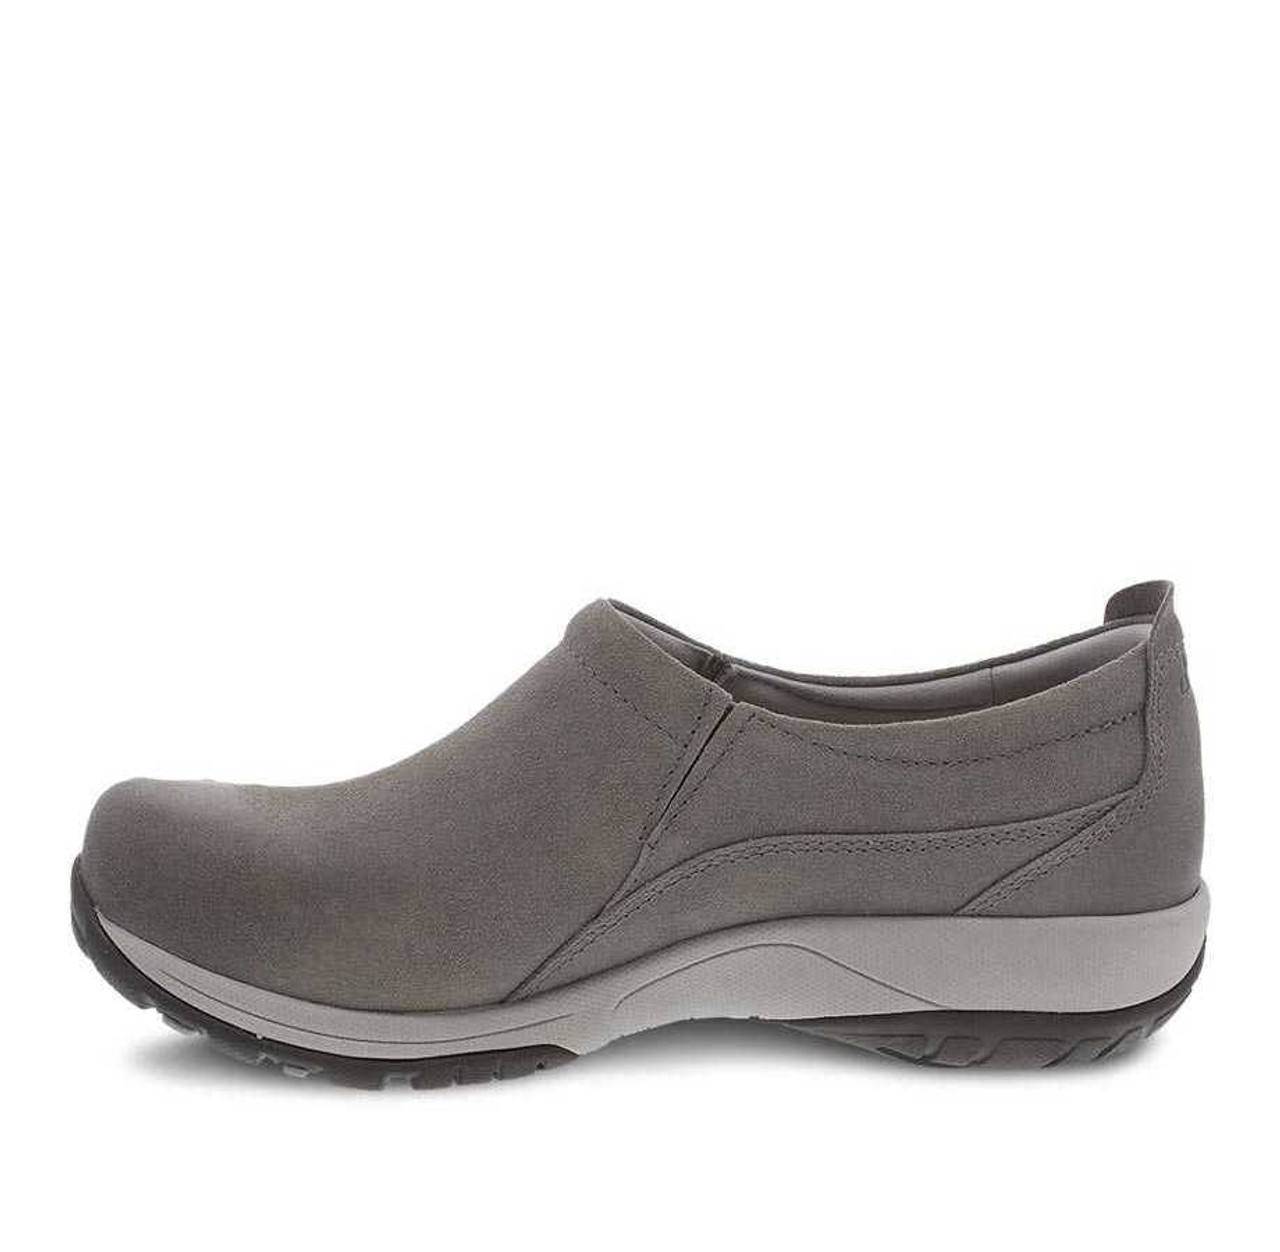 Dansko Patti Waterproof Shoes- Comfort Shoes